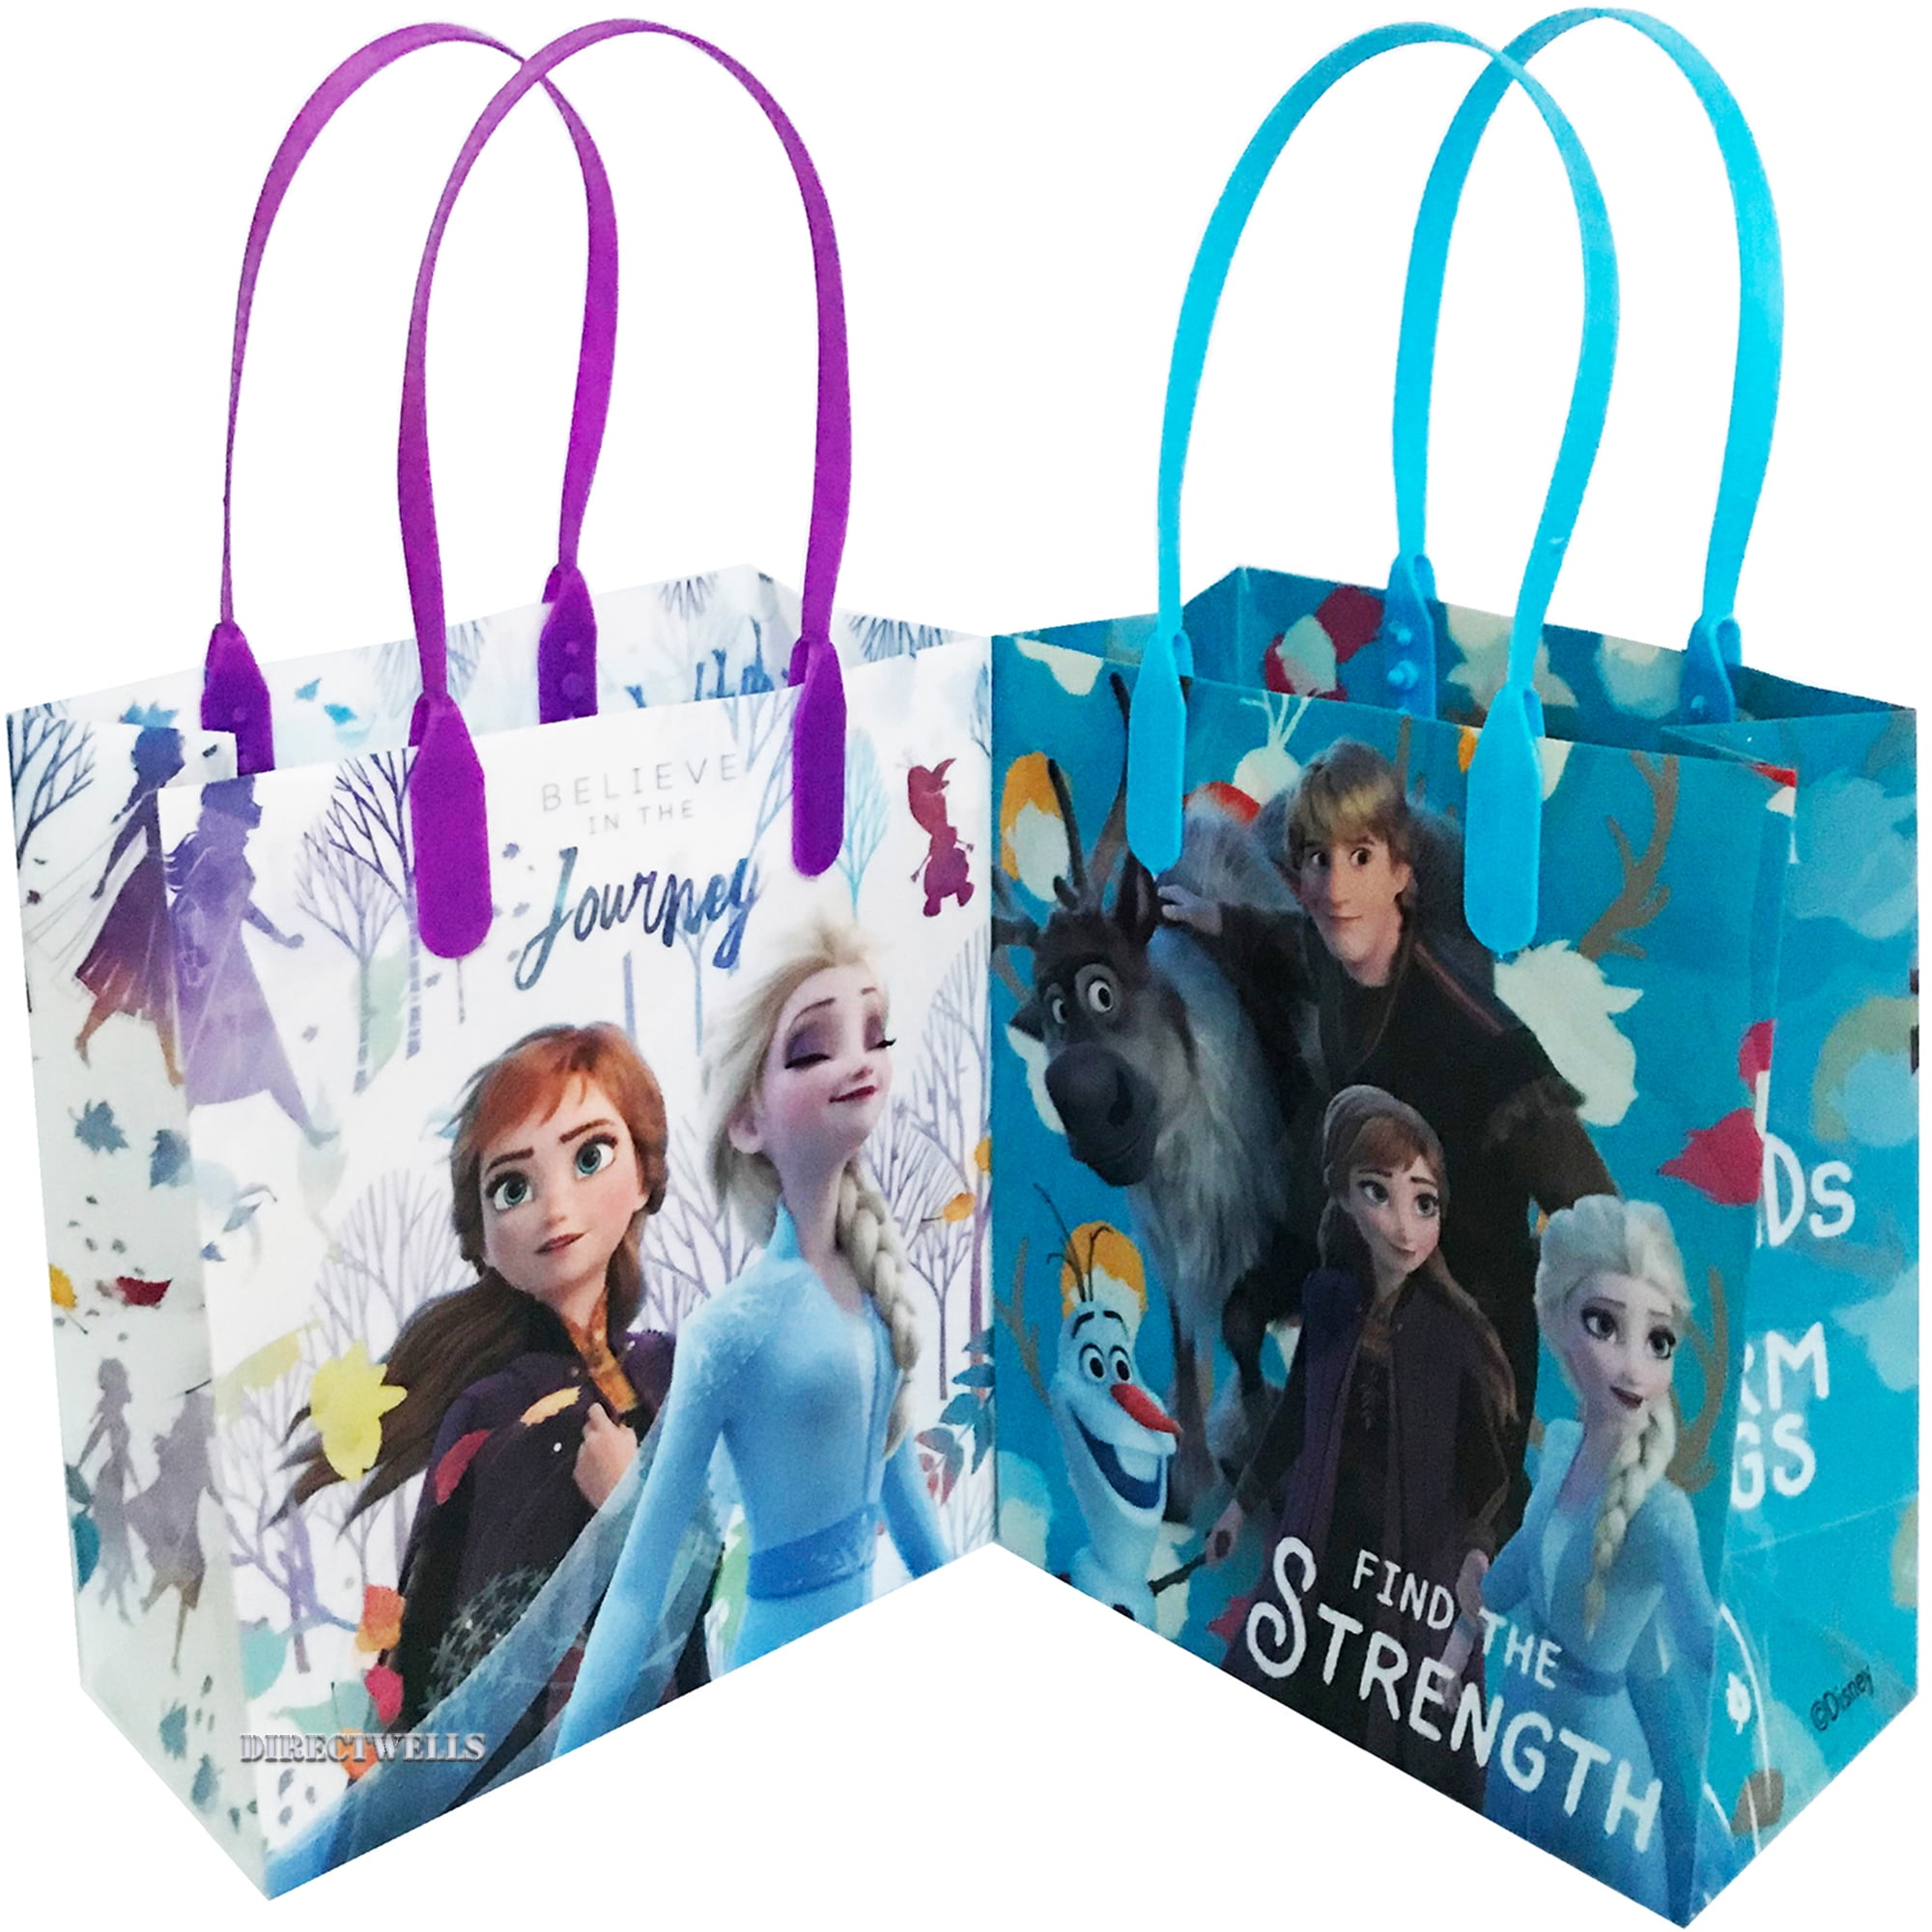 Frozen 2 Believe in The Journey 6ck Reusable 10" Tote Bags Goodie Treat Bags